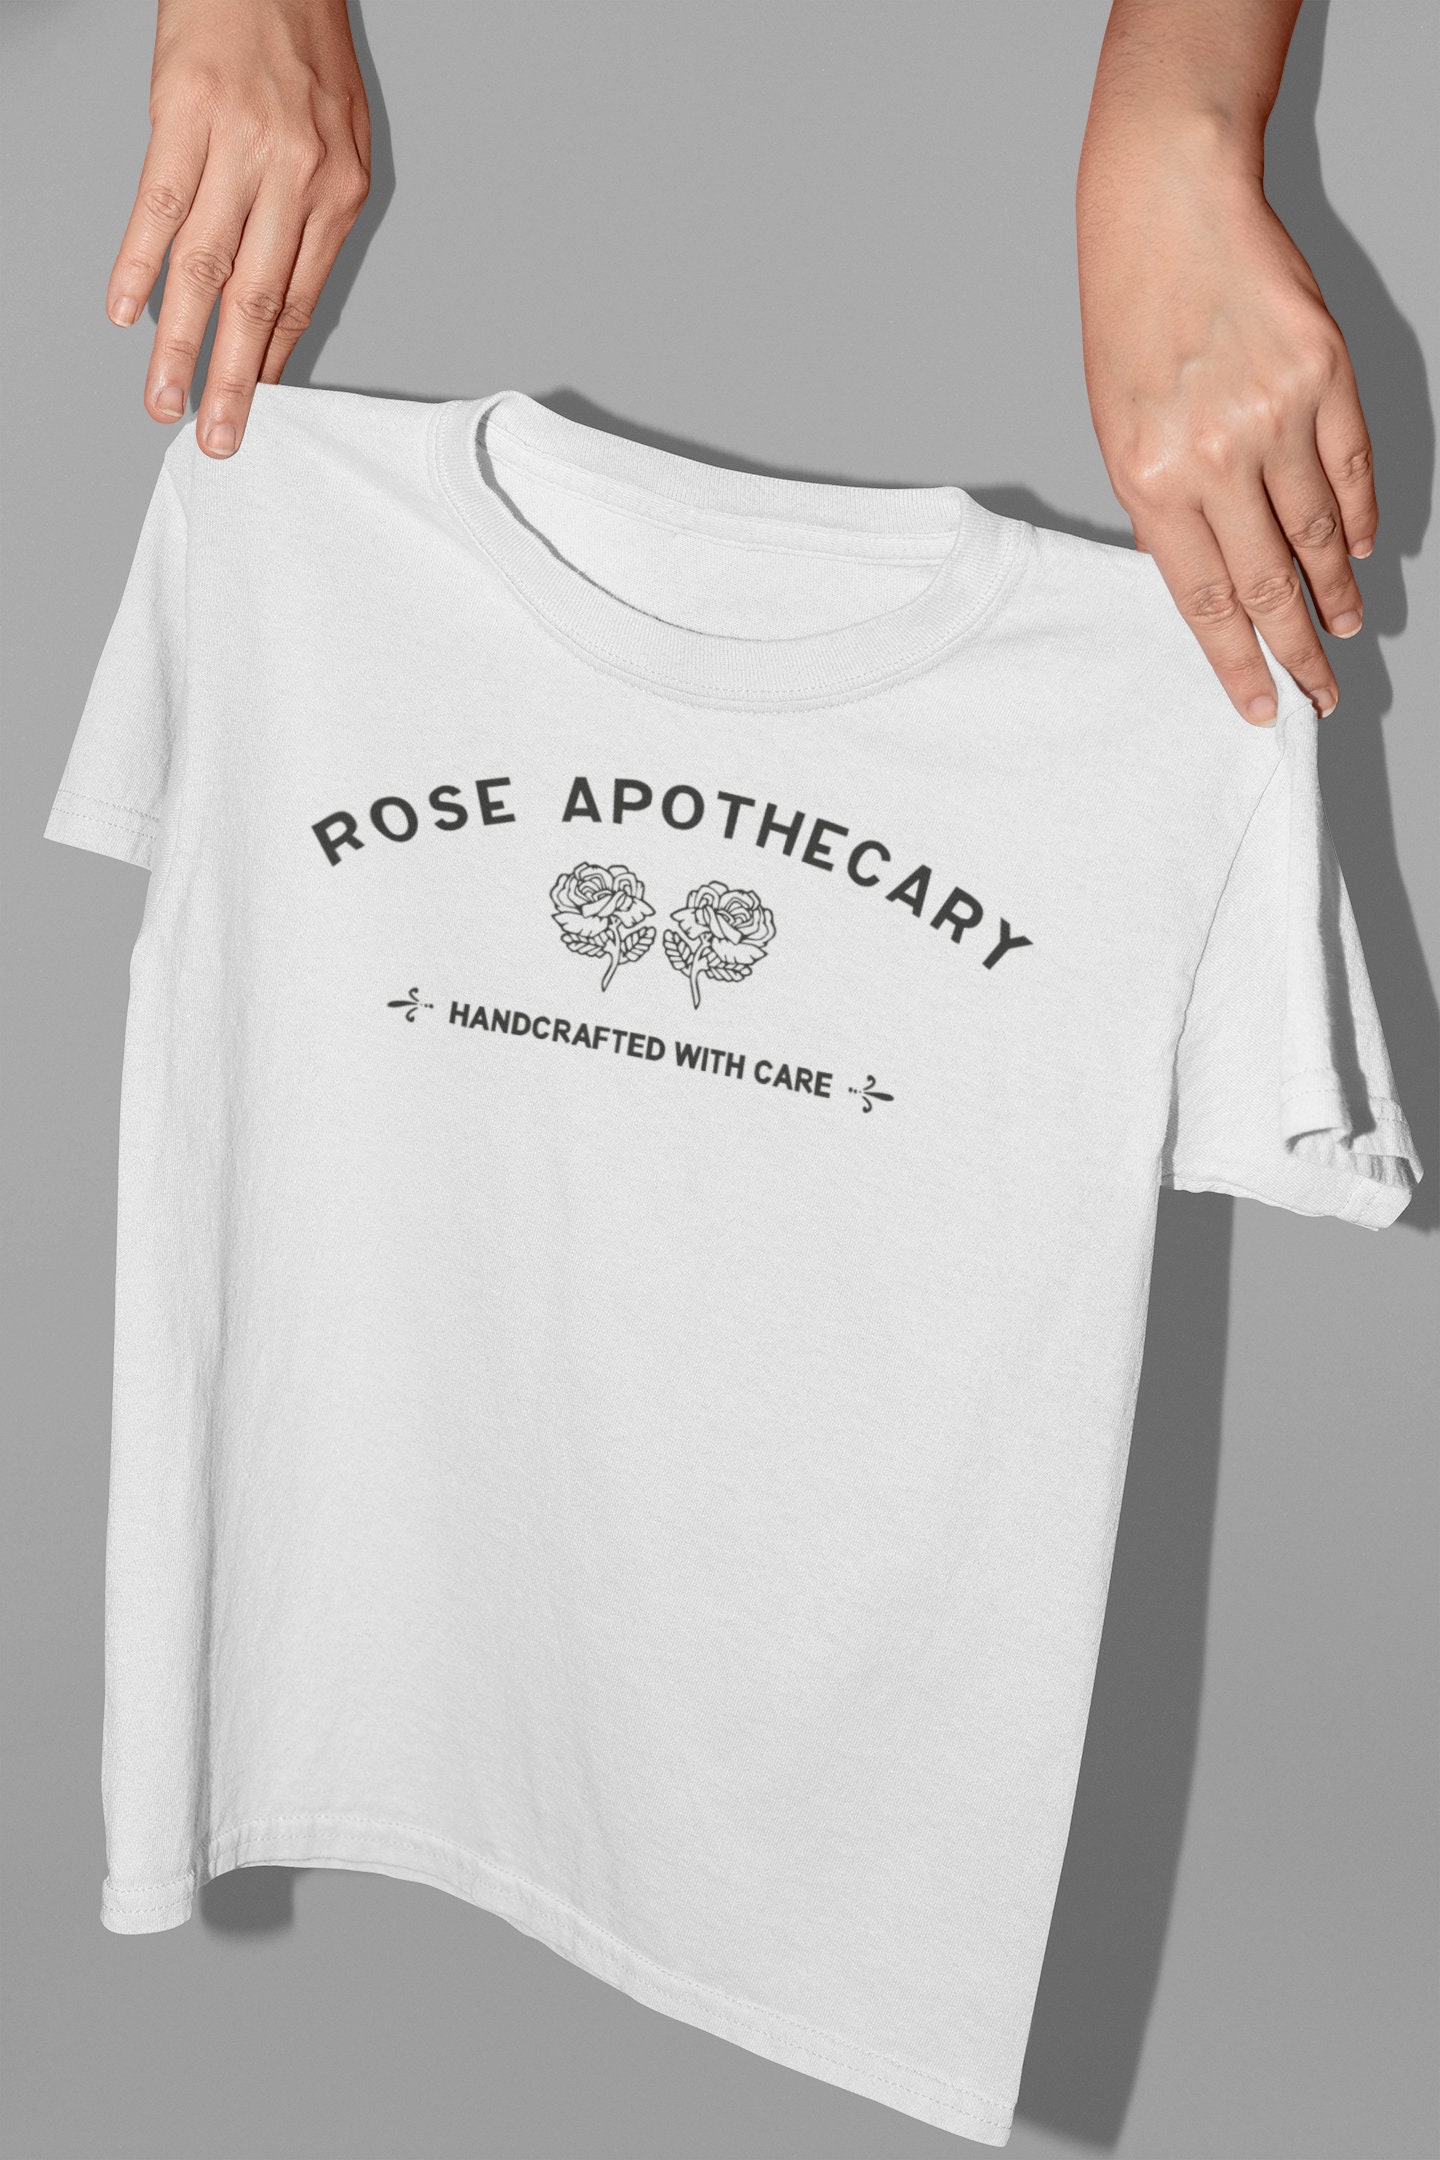 Rose Apothecary Tshirt Alexis Rose Tshirt Schiits Creek | Etsy